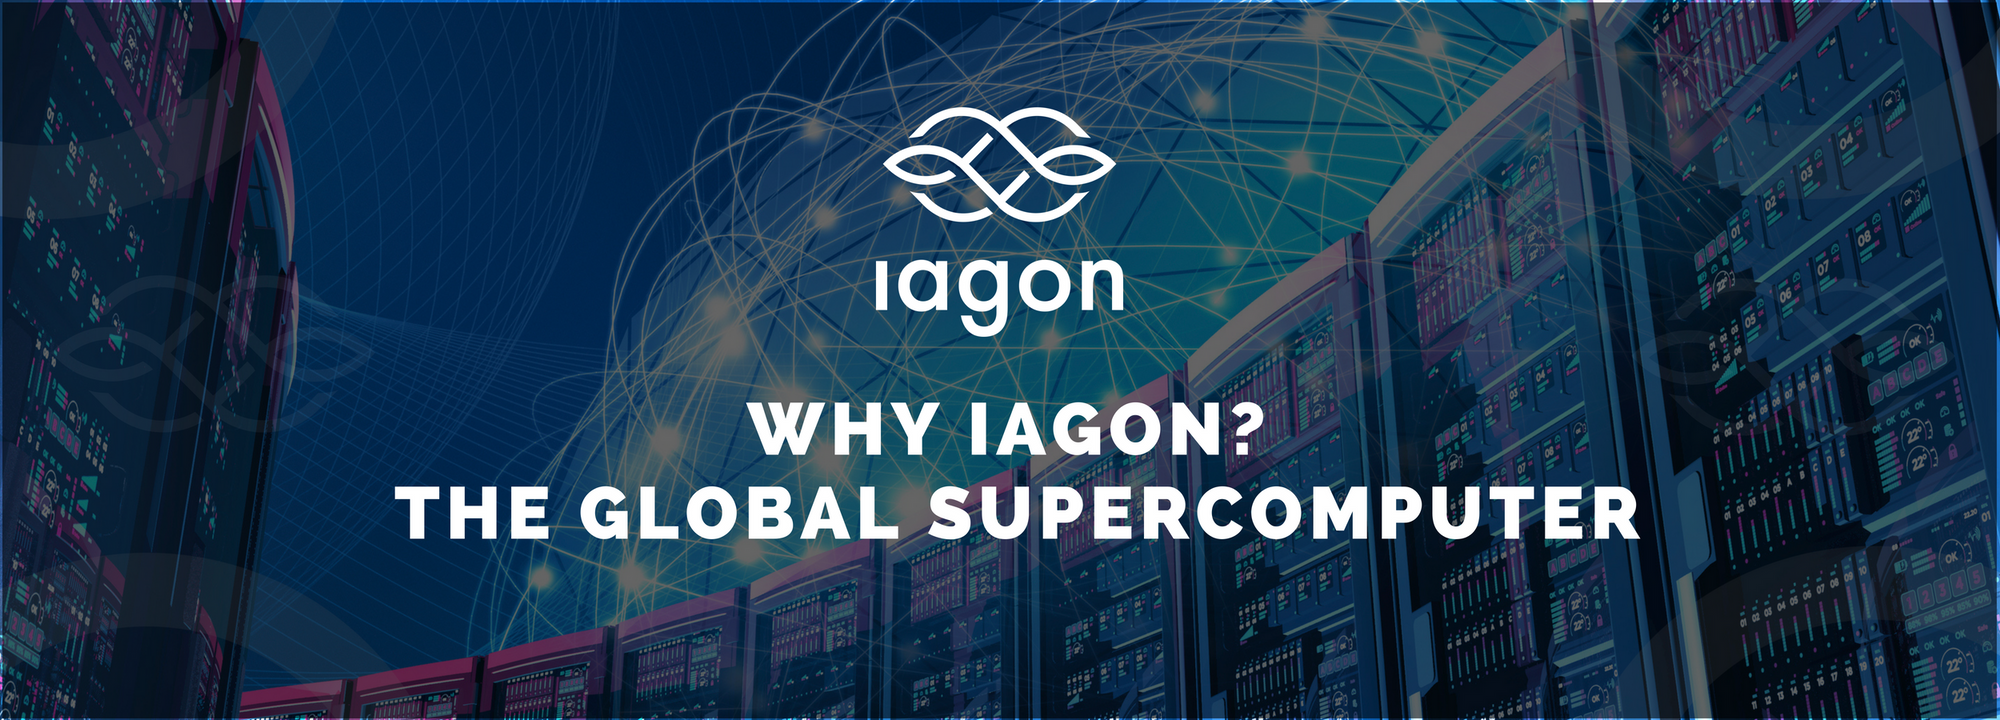 Why Iagon? The Global Supercomputer